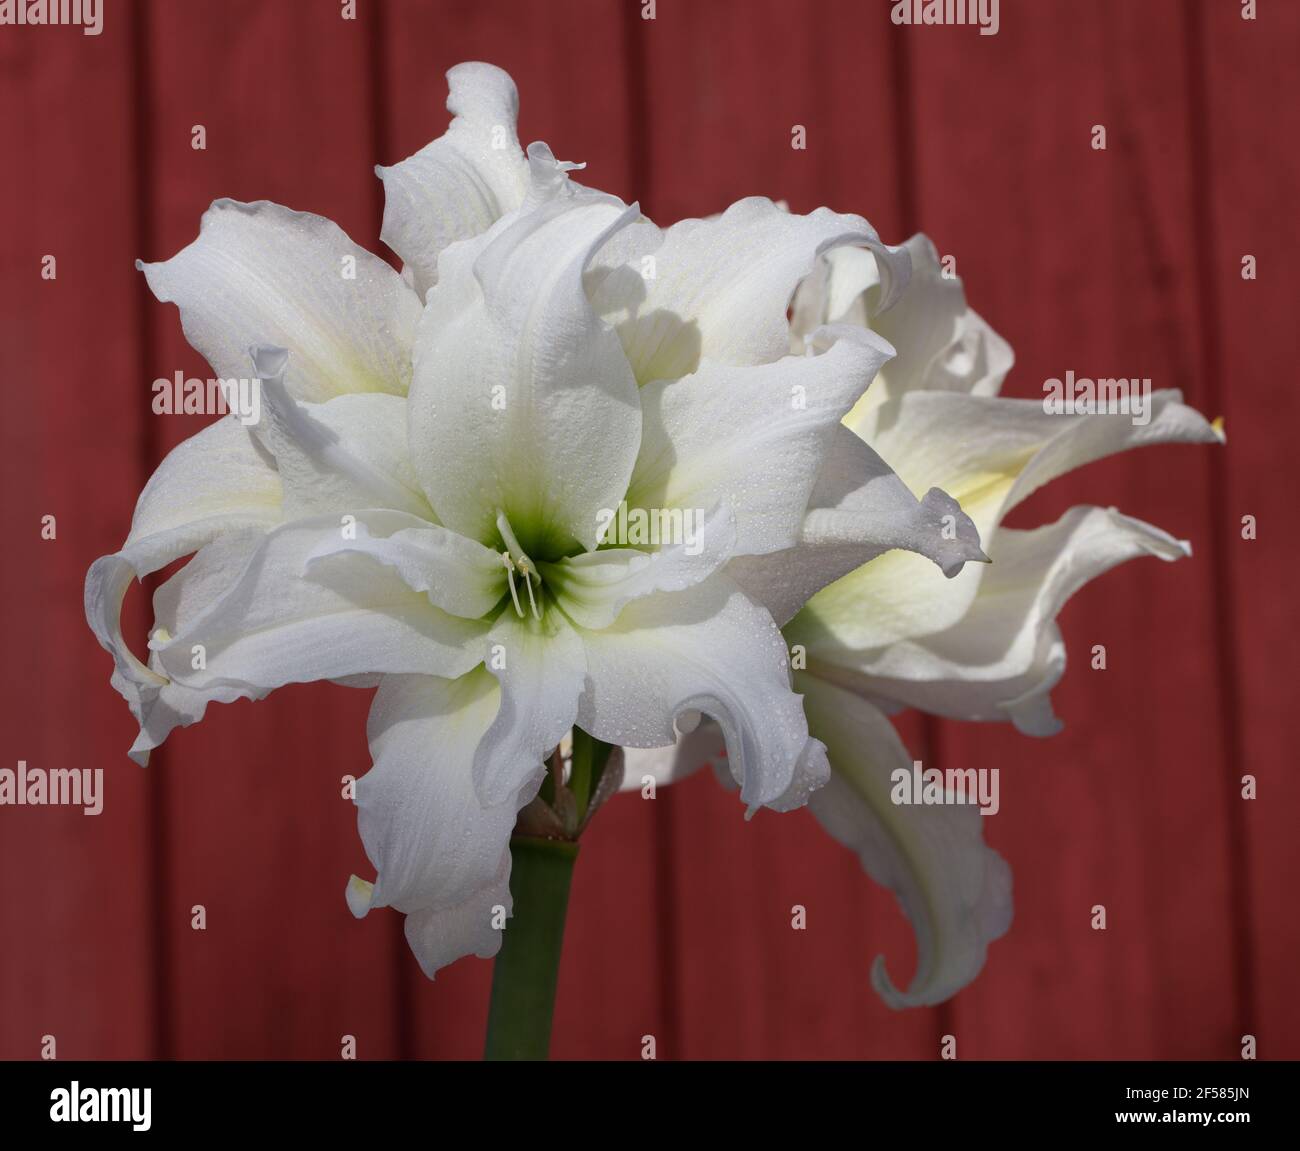 'Double White' Hippeastrum, Amaryllis (Hippeastrum x hortorum) Stock Photo